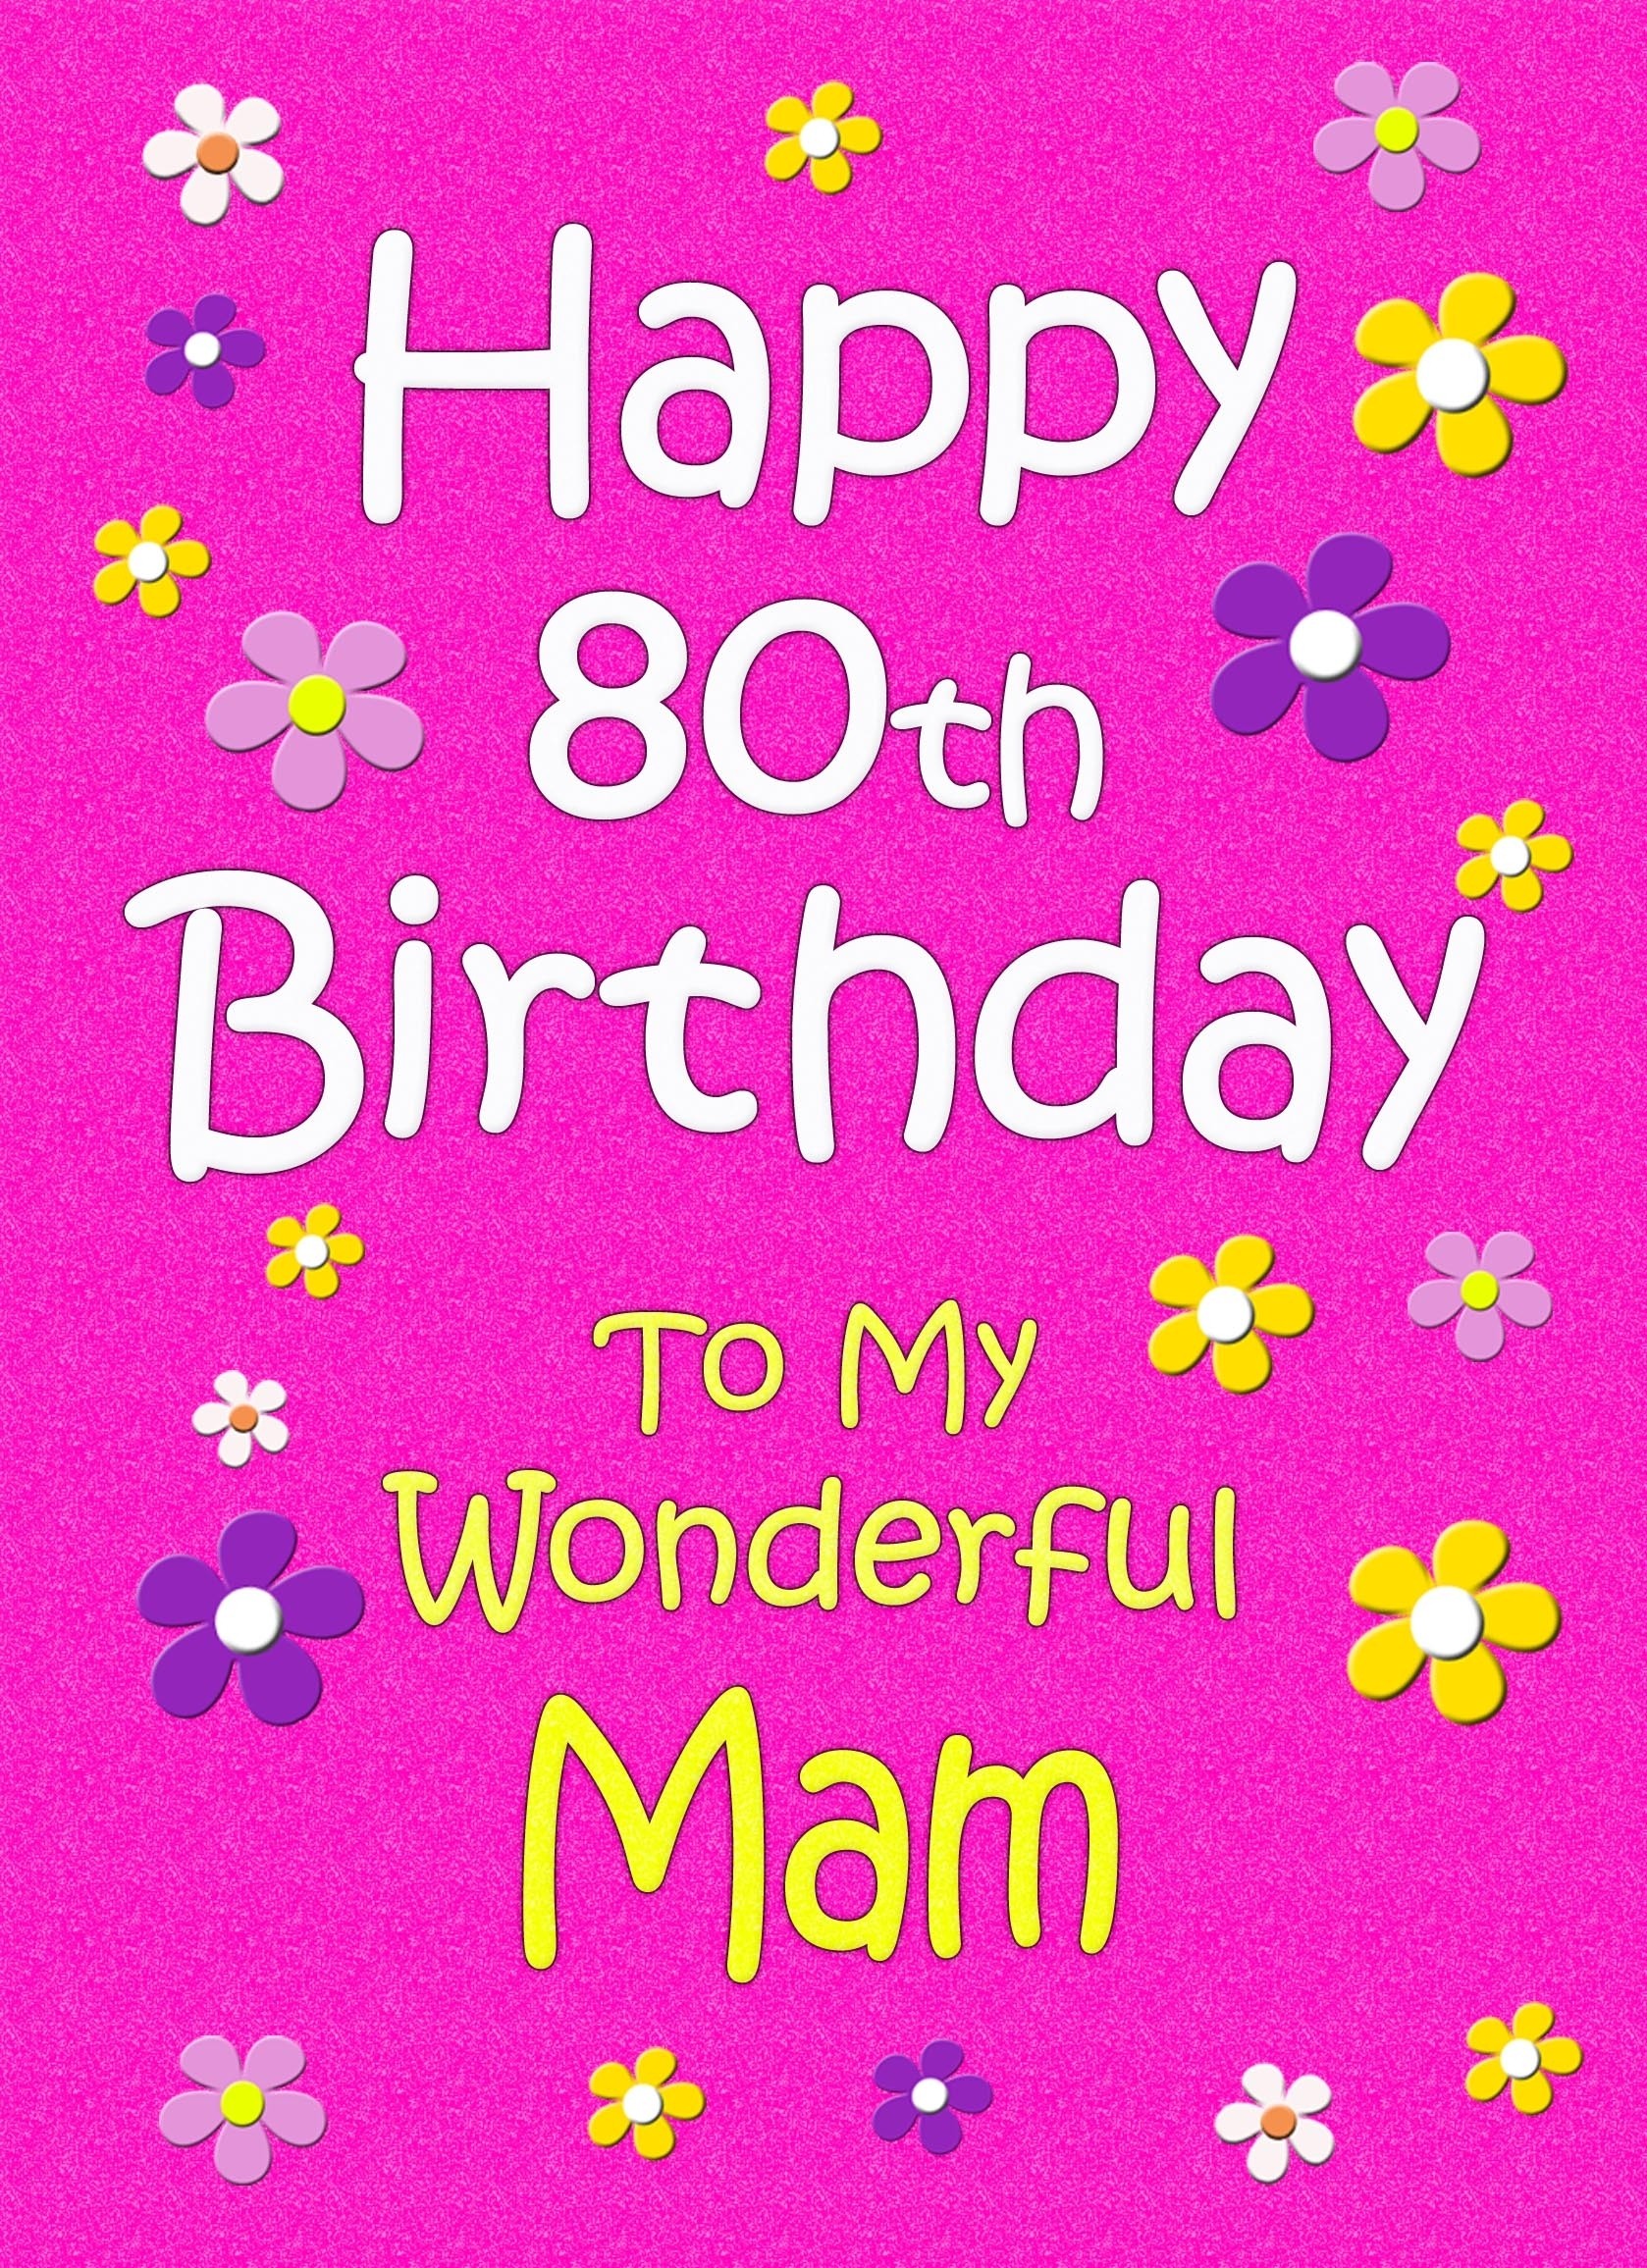 Mam 80th Birthday Card (Pink)